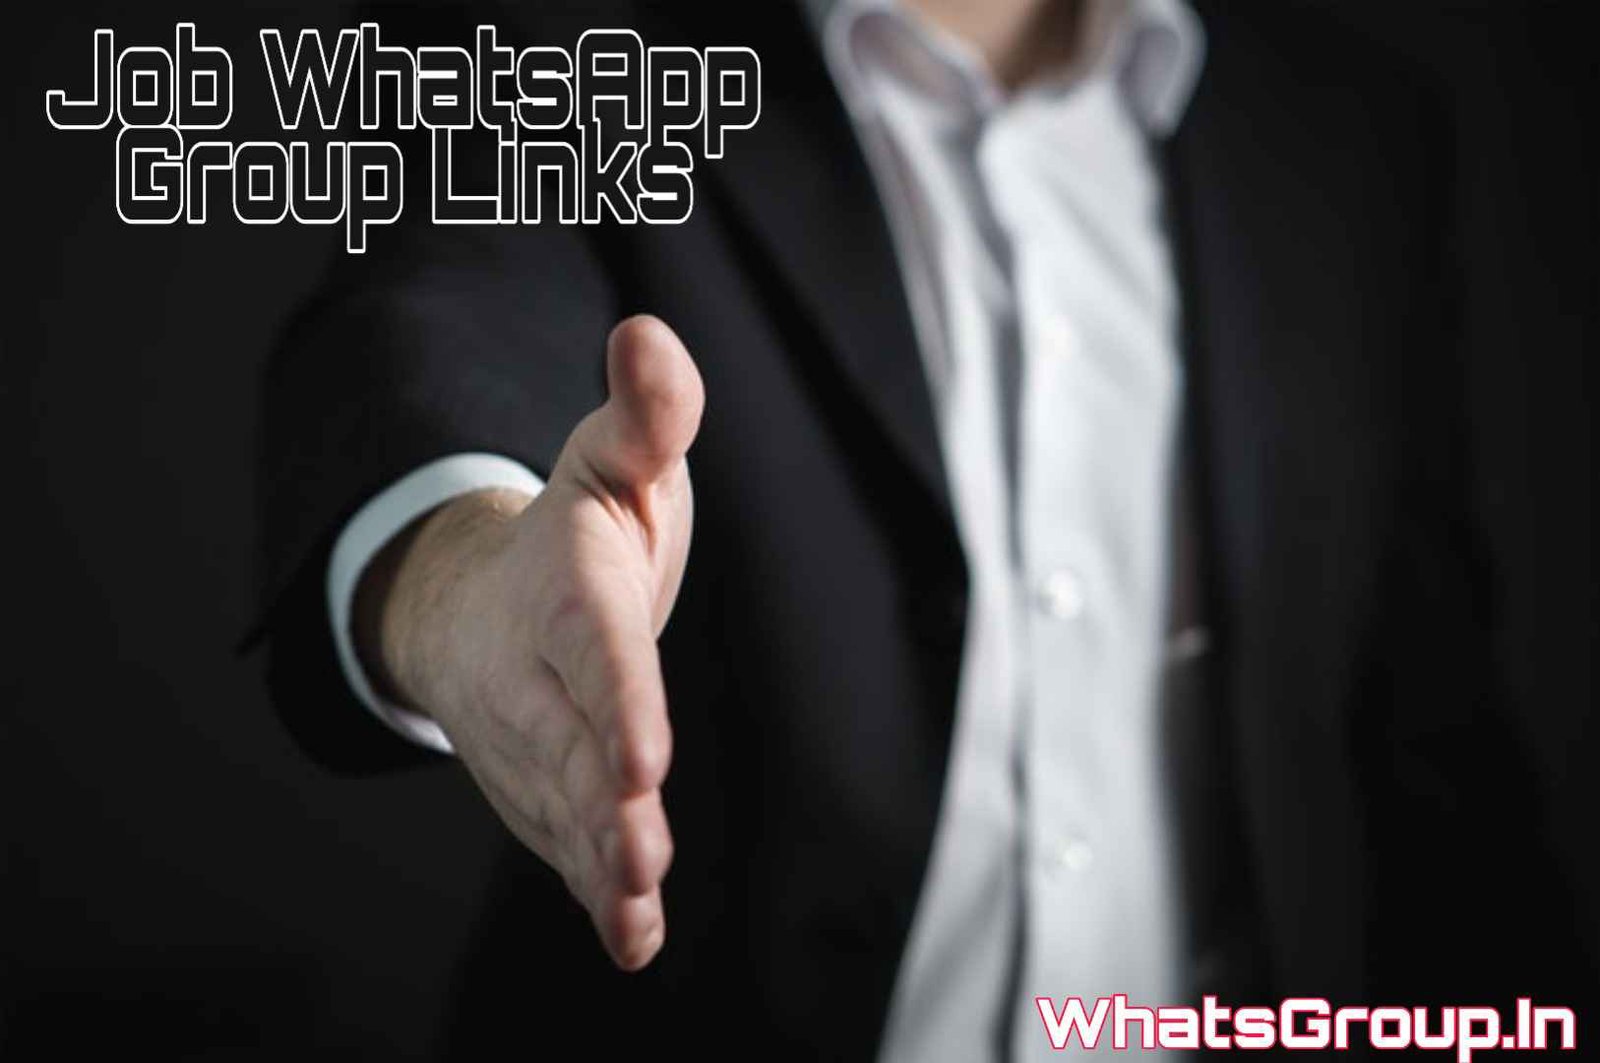 Job WhatsApp Group Links